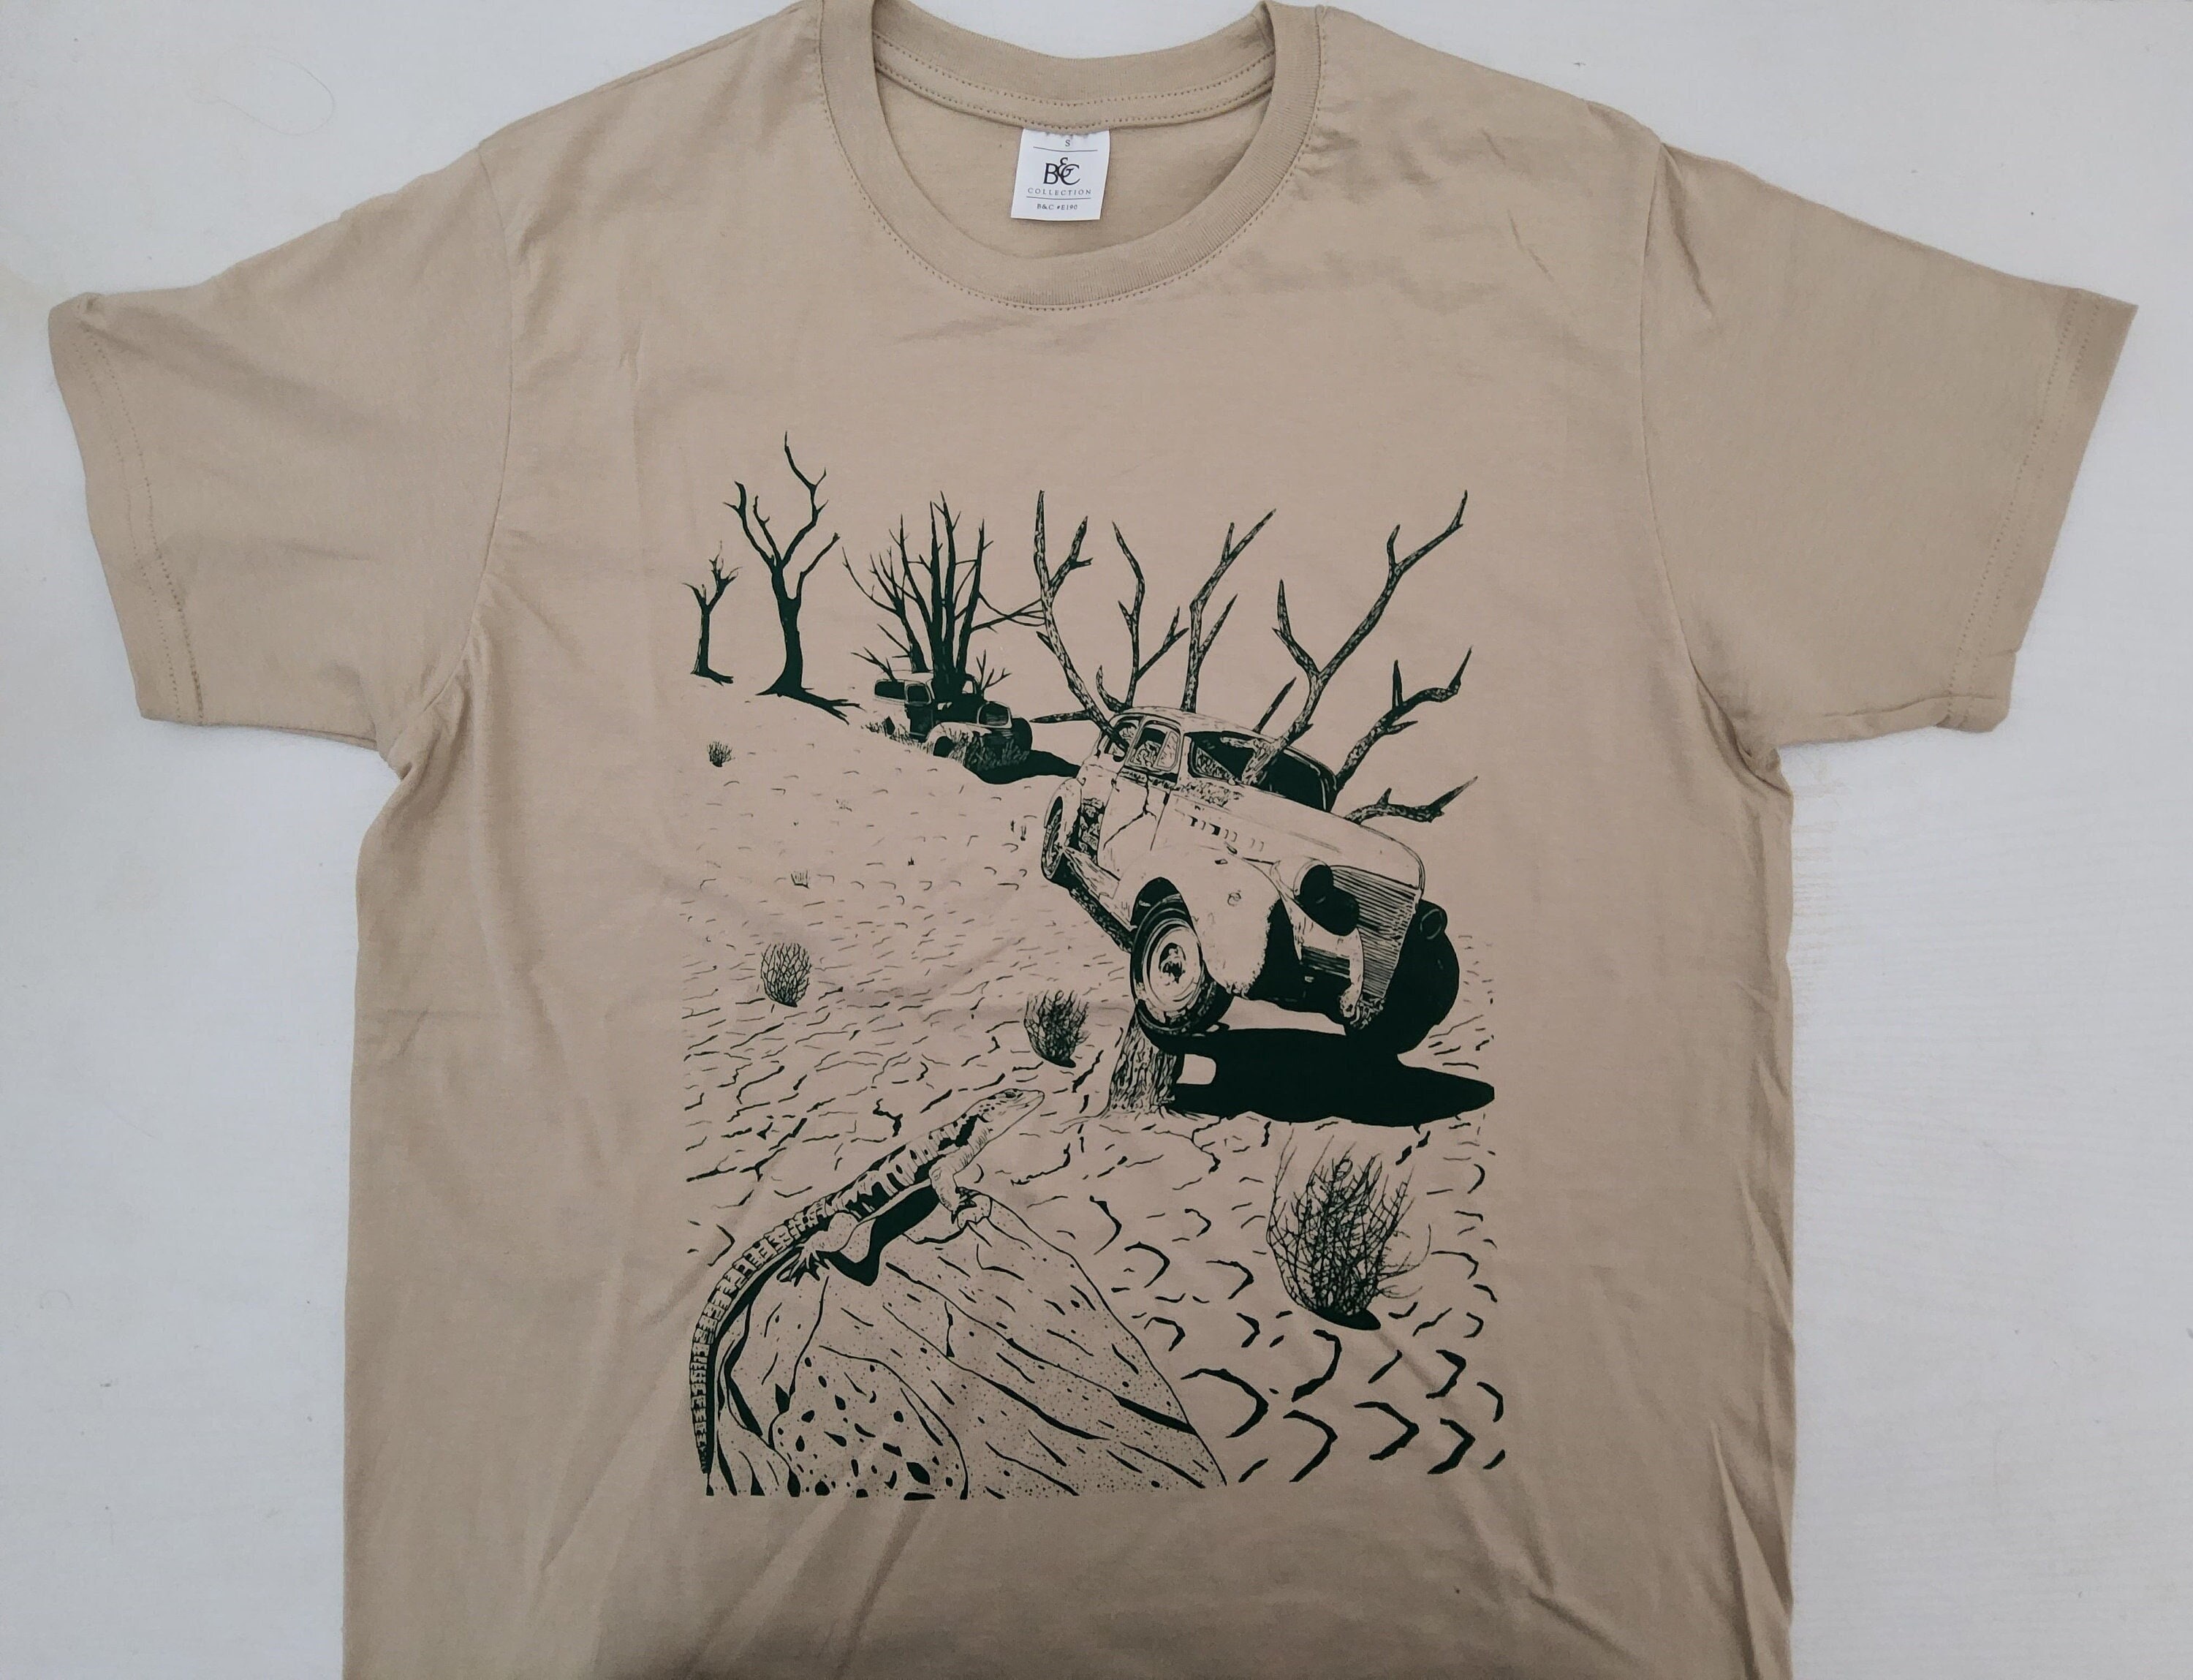 Tree T-shirt With Hand-printed Original Design, B&C Sand Color T-shirt,  100% Cotton, Crew Neck, Short Sleeve - Etsy